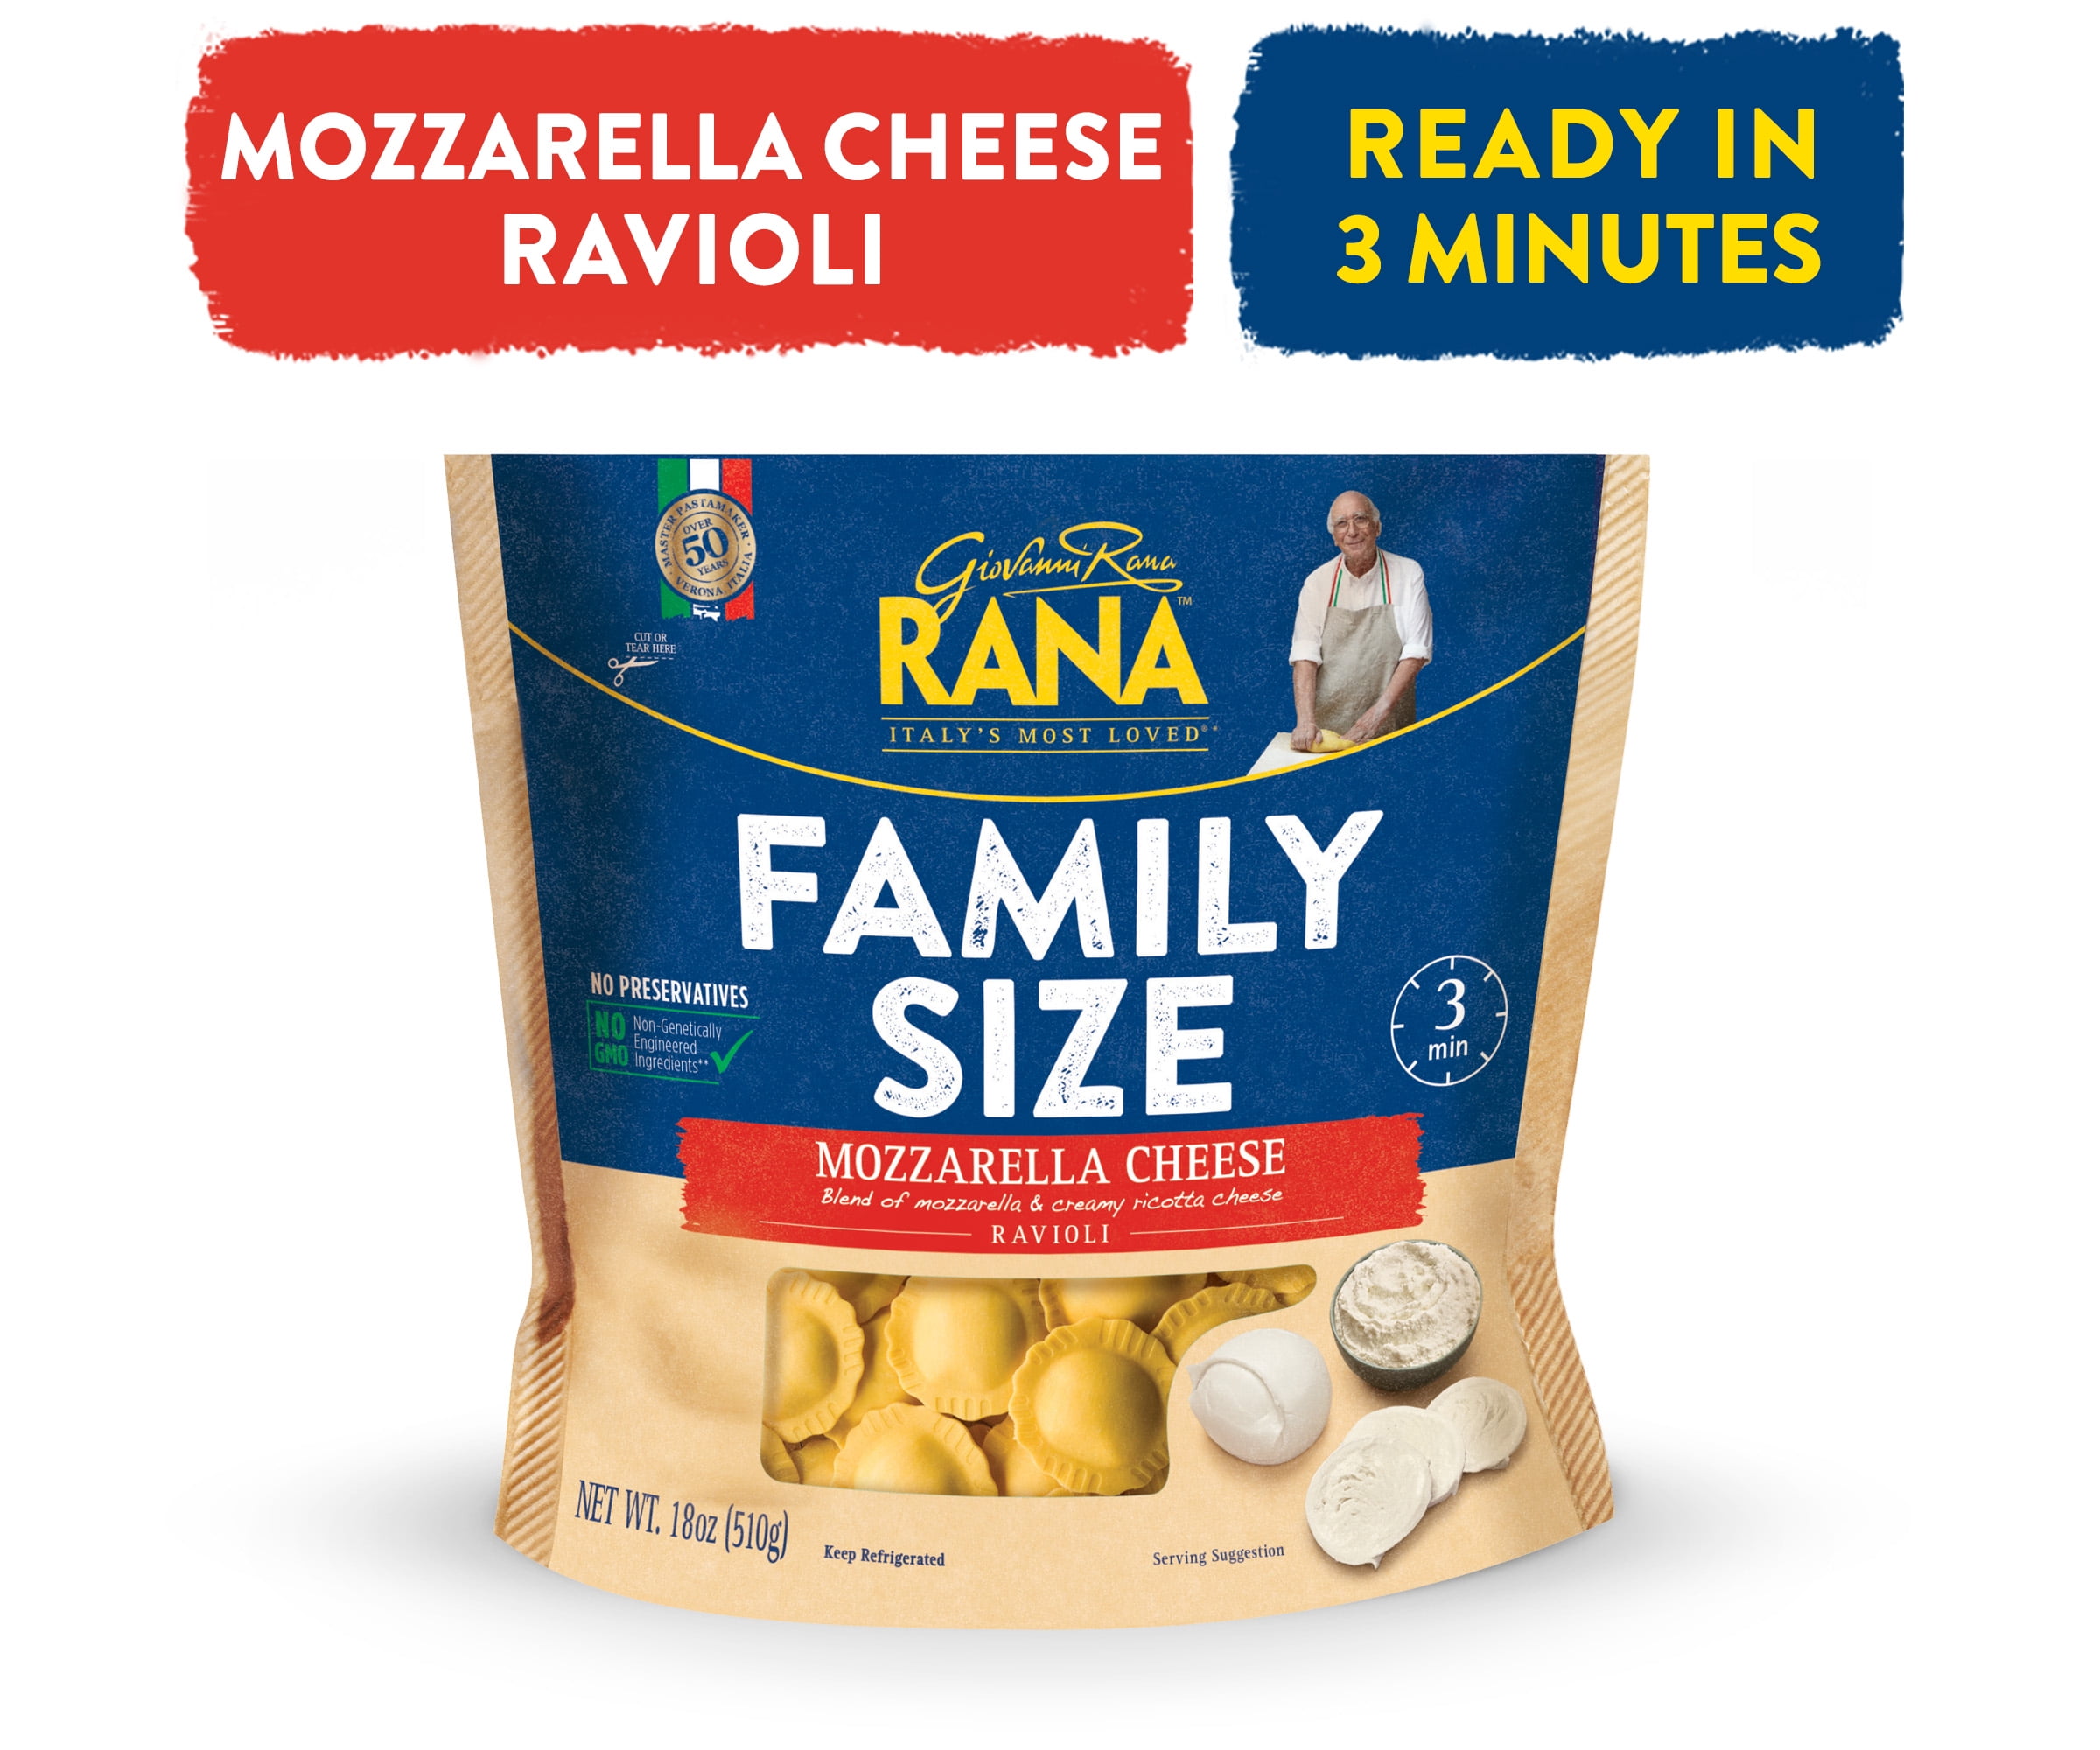 Giovanni Rana Homestyle Ravioli Mozzarella Cheese Premium Filled Italian Pasta Bag (Family Size, 18oz)